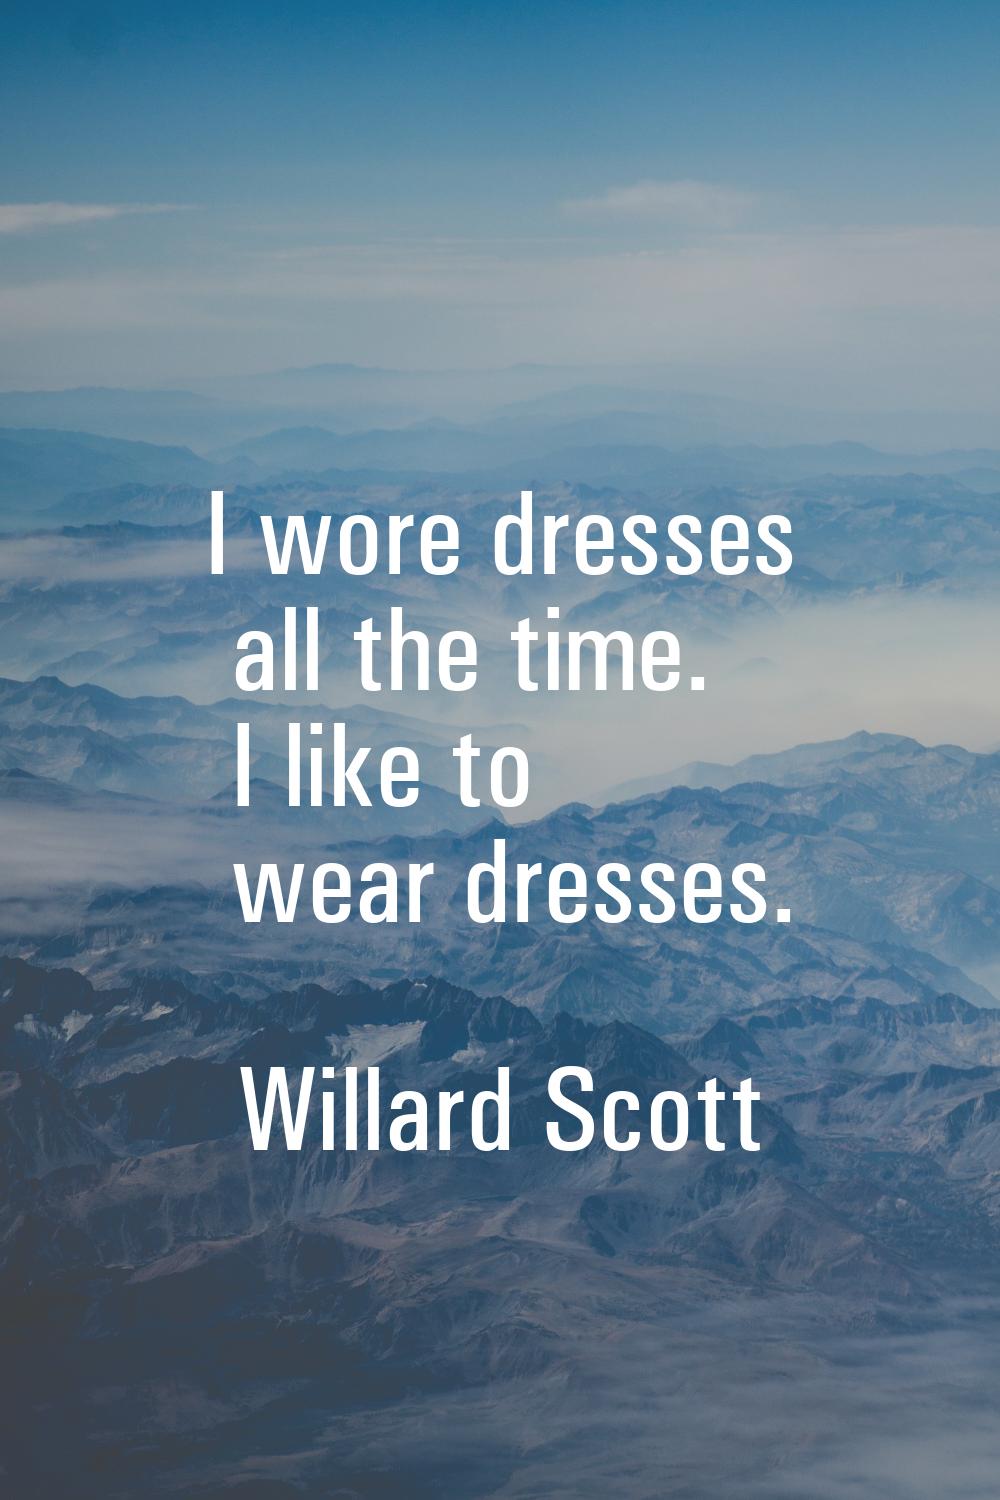 I wore dresses all the time. I like to wear dresses.